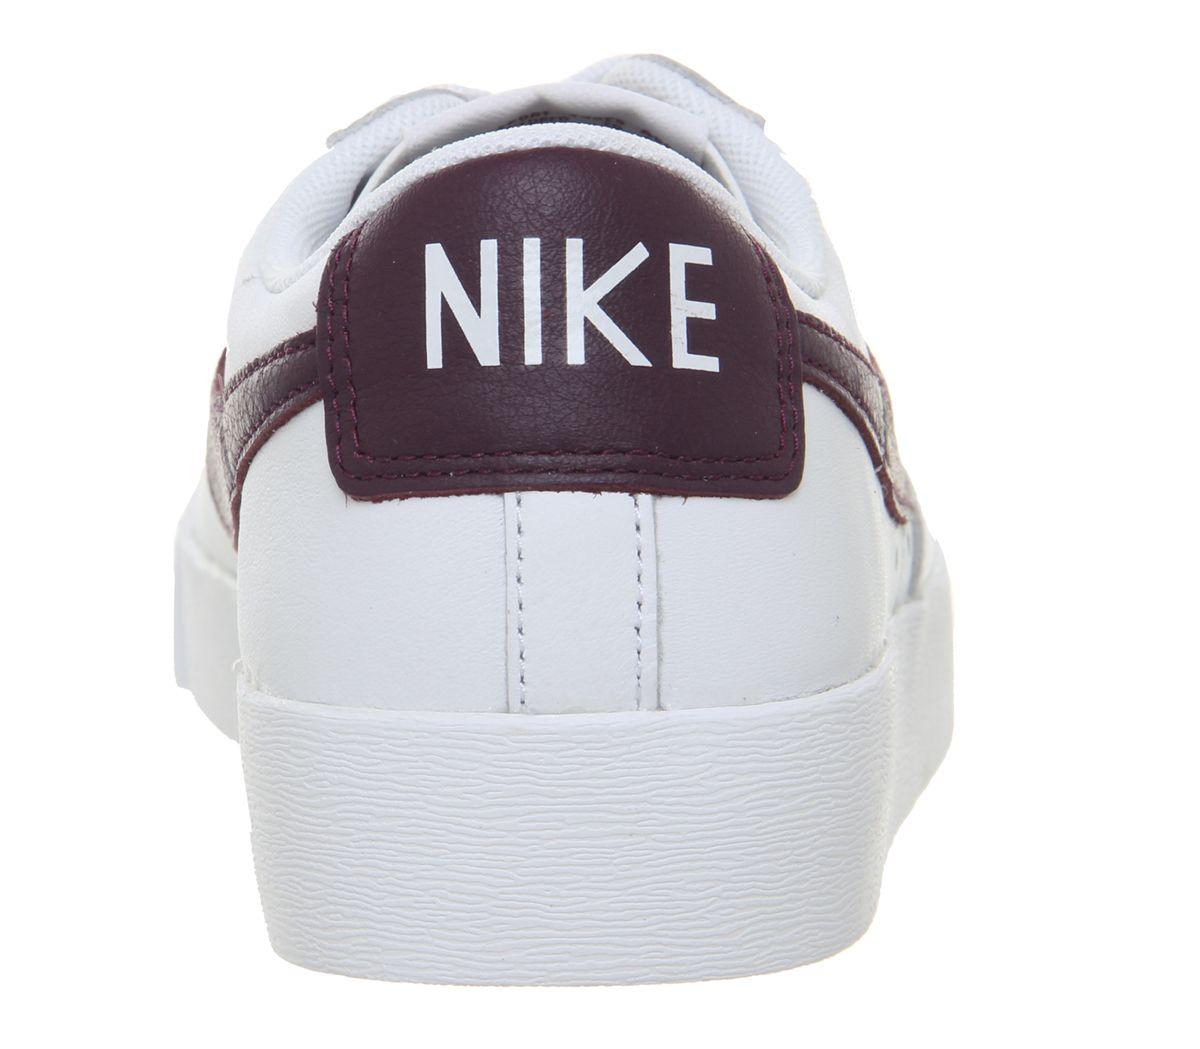 Nike Leather Blazer Low F in White Bordeaux White f (White) - Lyst